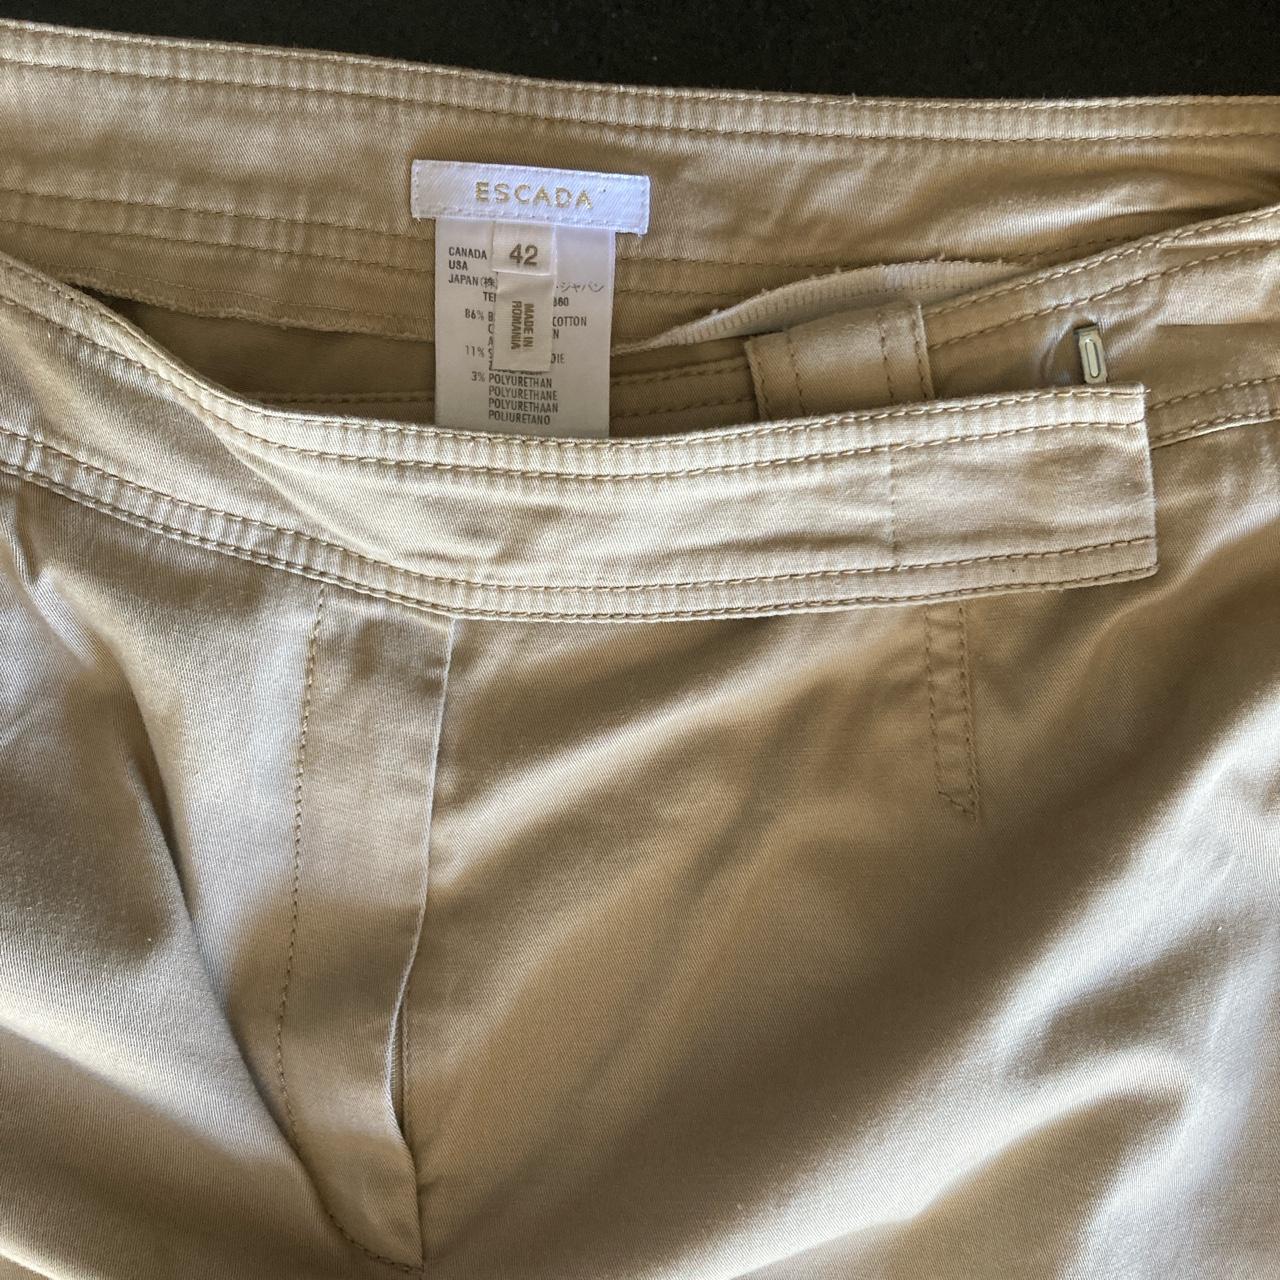 Escada beige pants cream 90s size 42 Size 12-14 AUD... - Depop